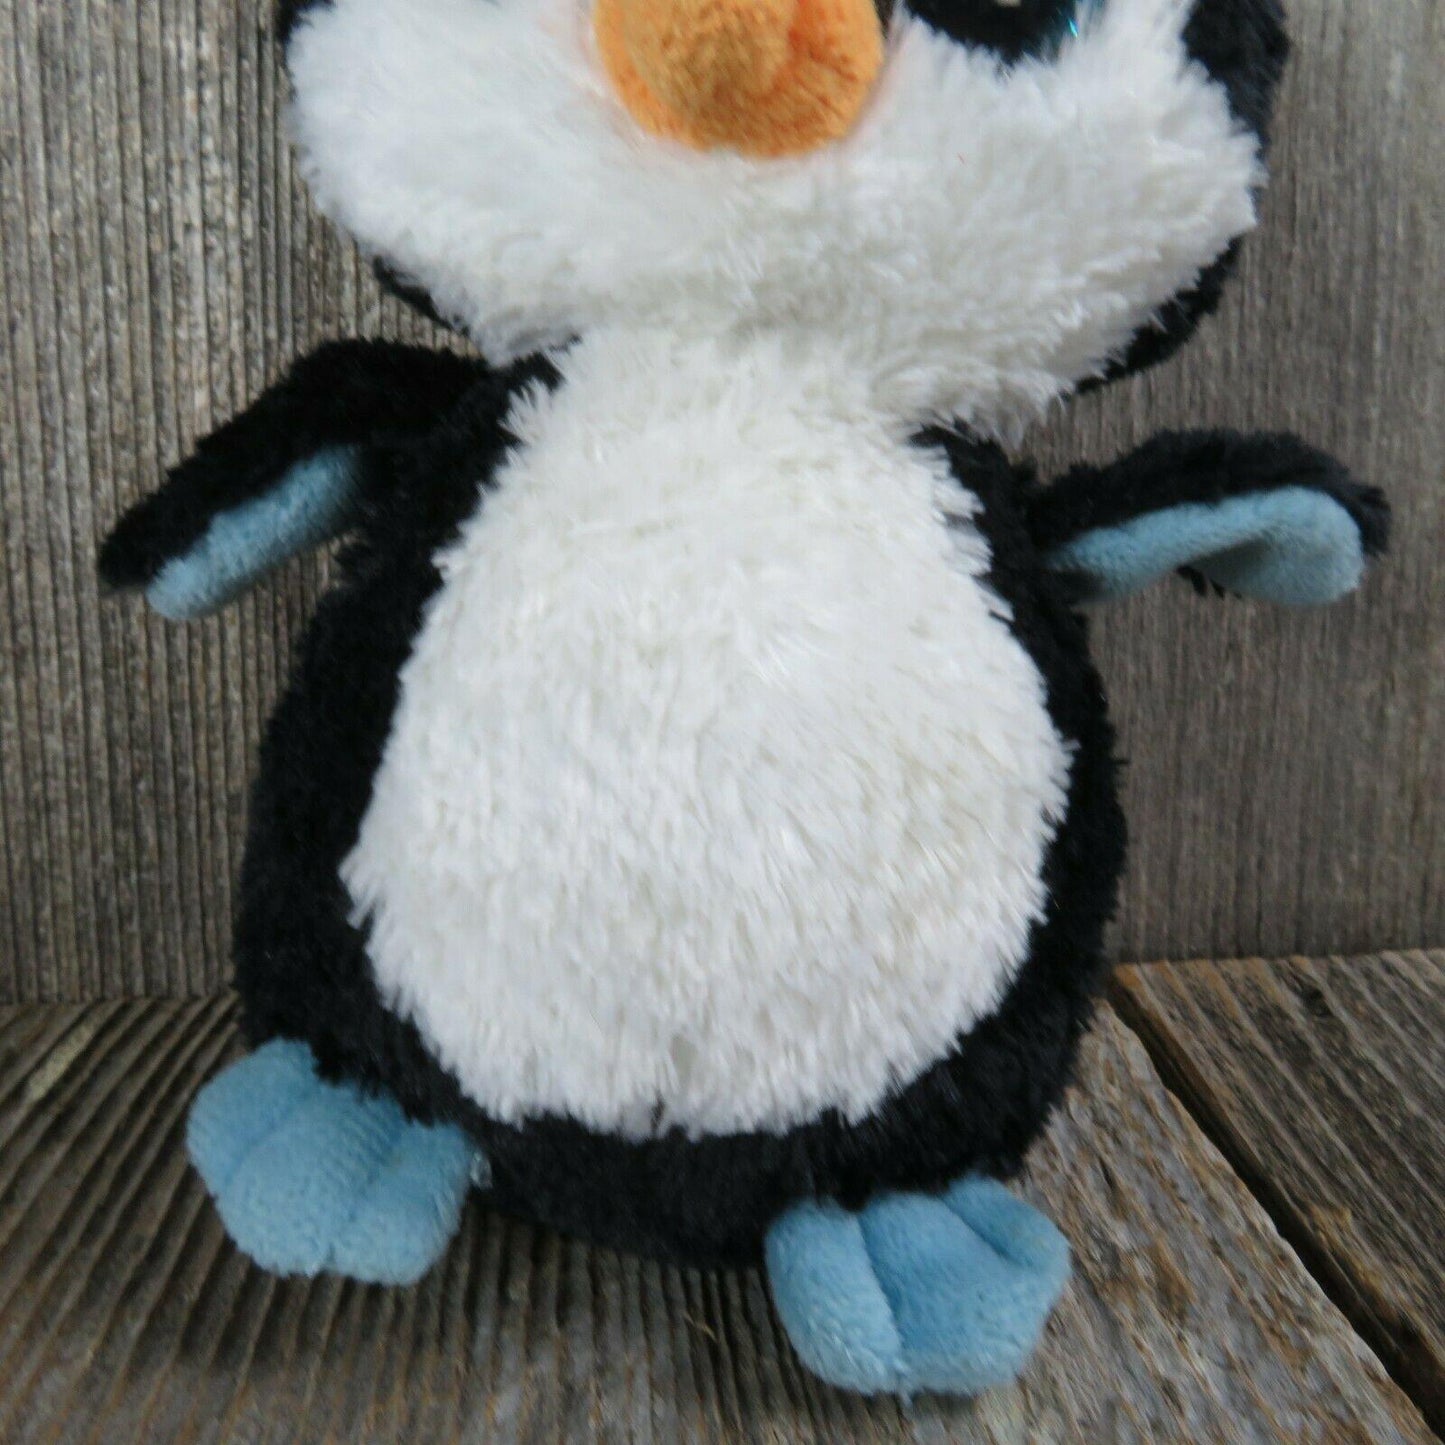 Penguin Plush Ty Beanie Boos Plush Waddles Blue Glitter Eyes Stuffed Animal